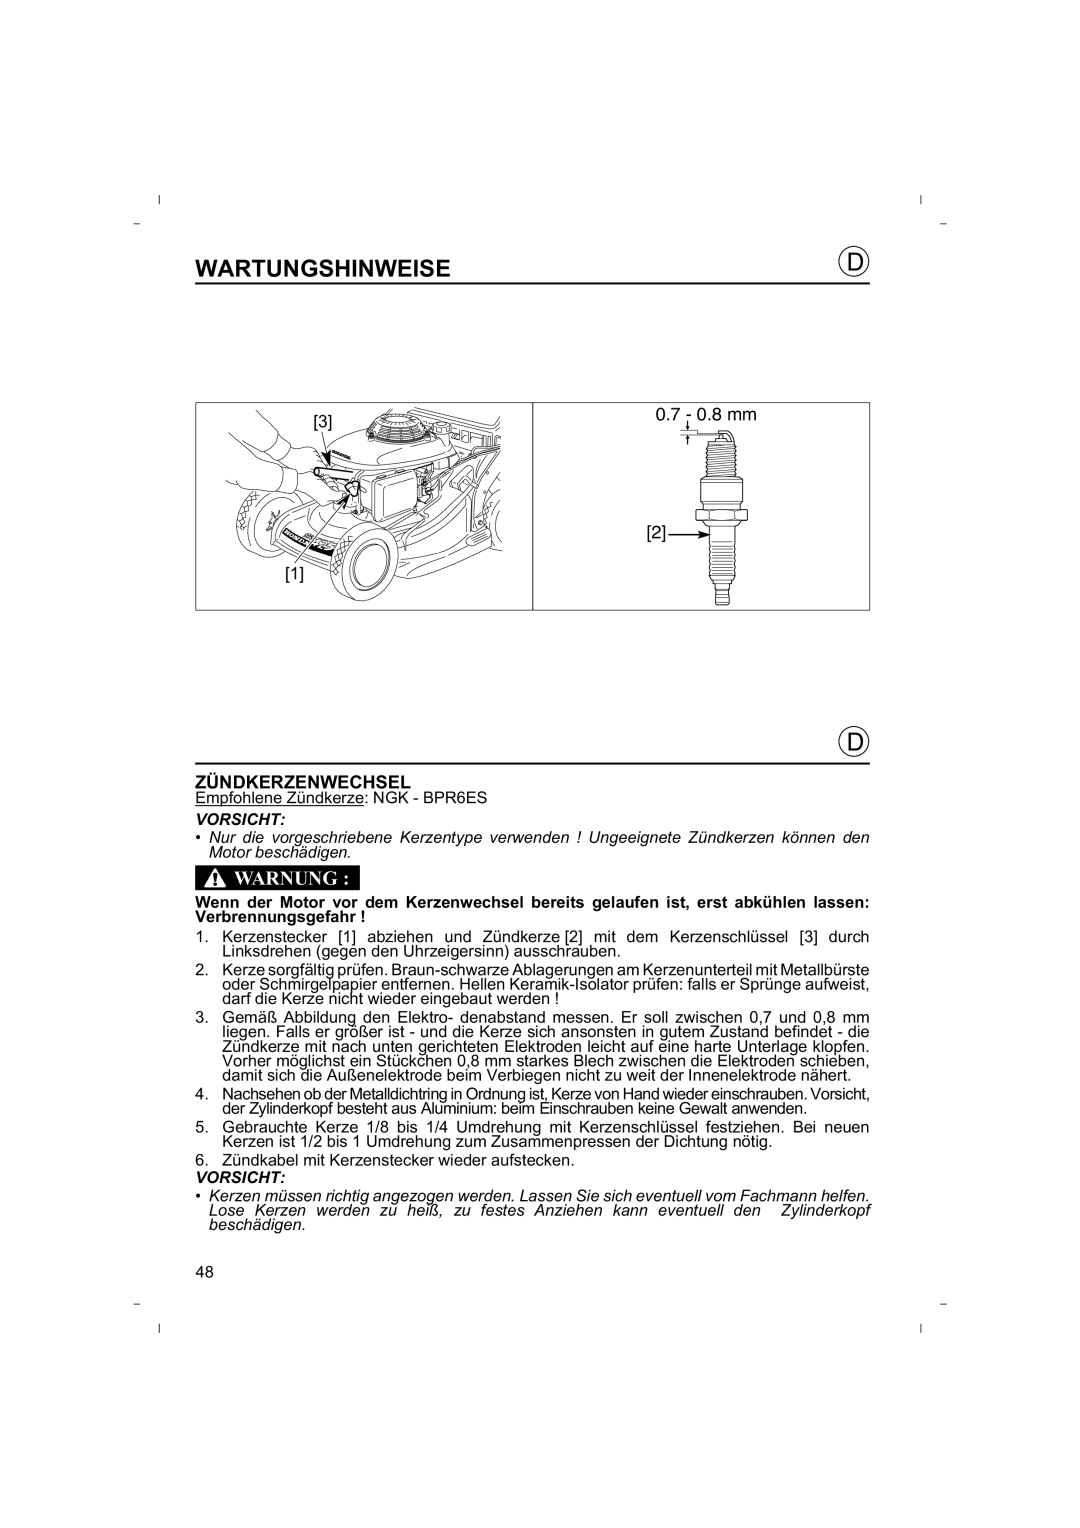 Honda Power Equipment HRB425C owner manual 0.7 - 0.8 mm, Zündkerzenwechsel, Wartungshinweise, Warnung 